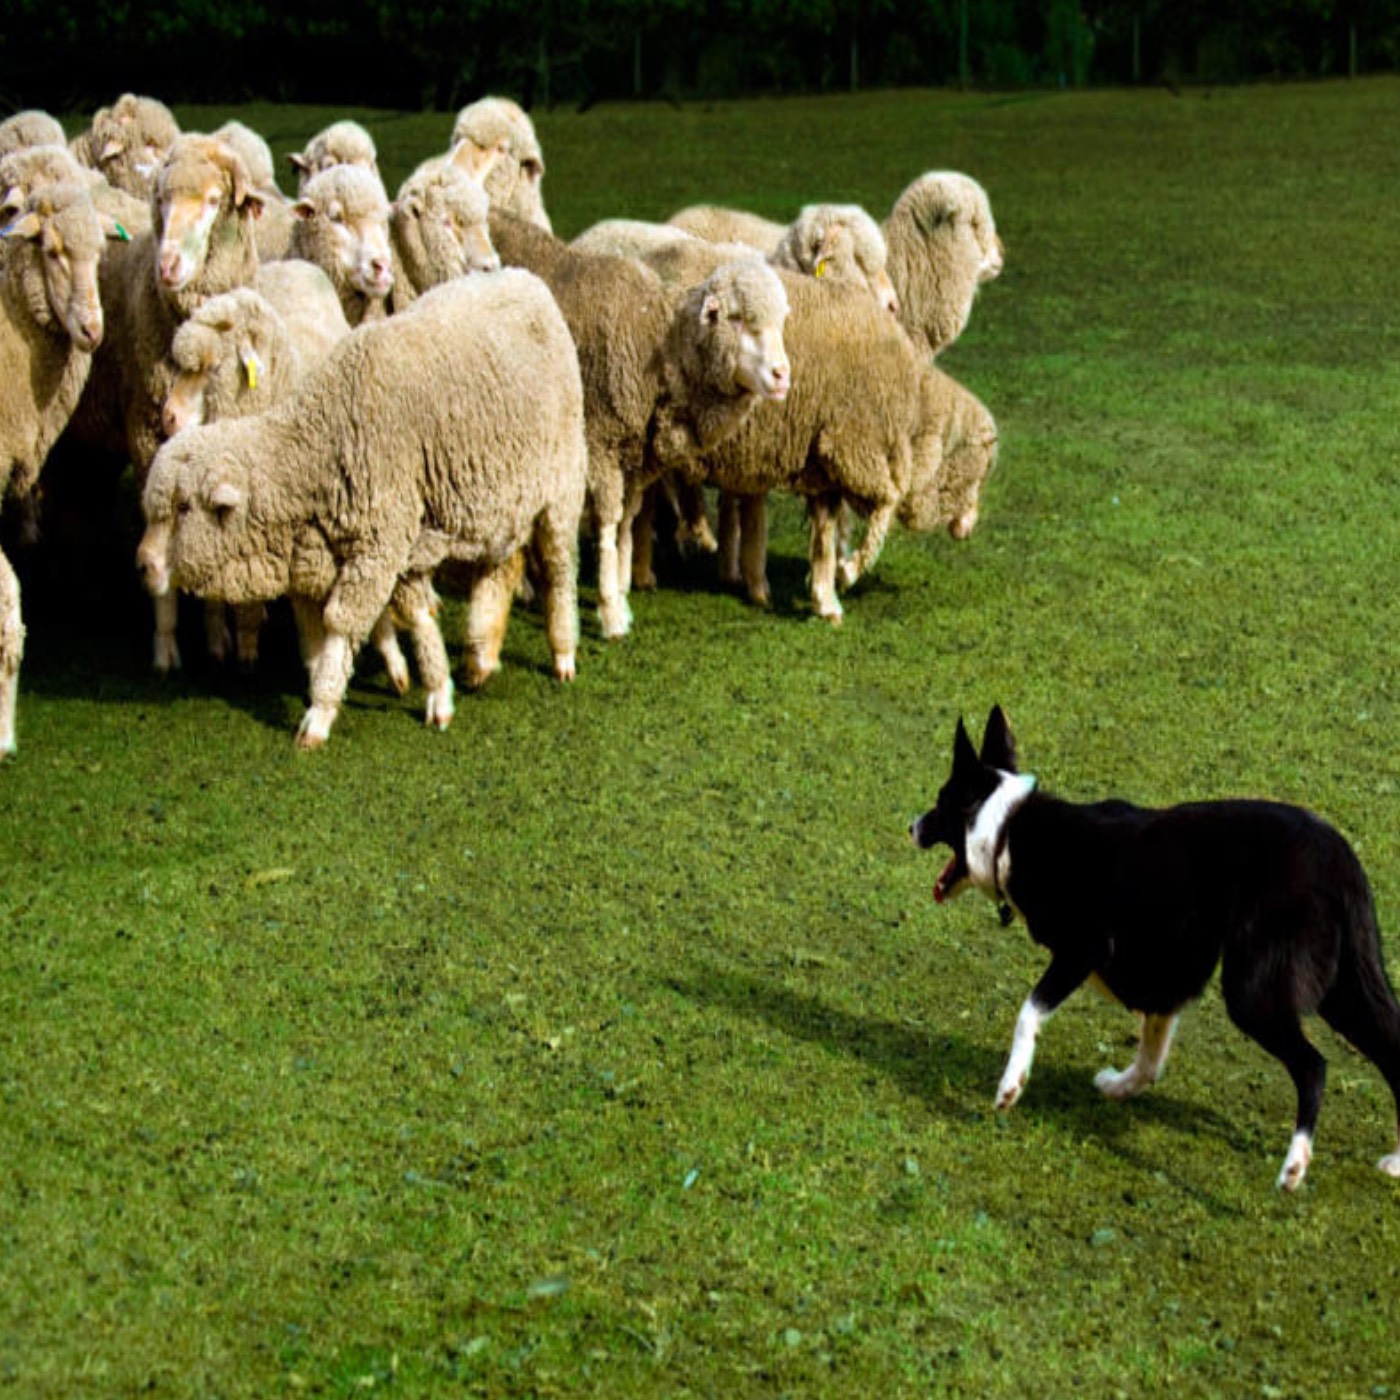 cattle dog herding sheep